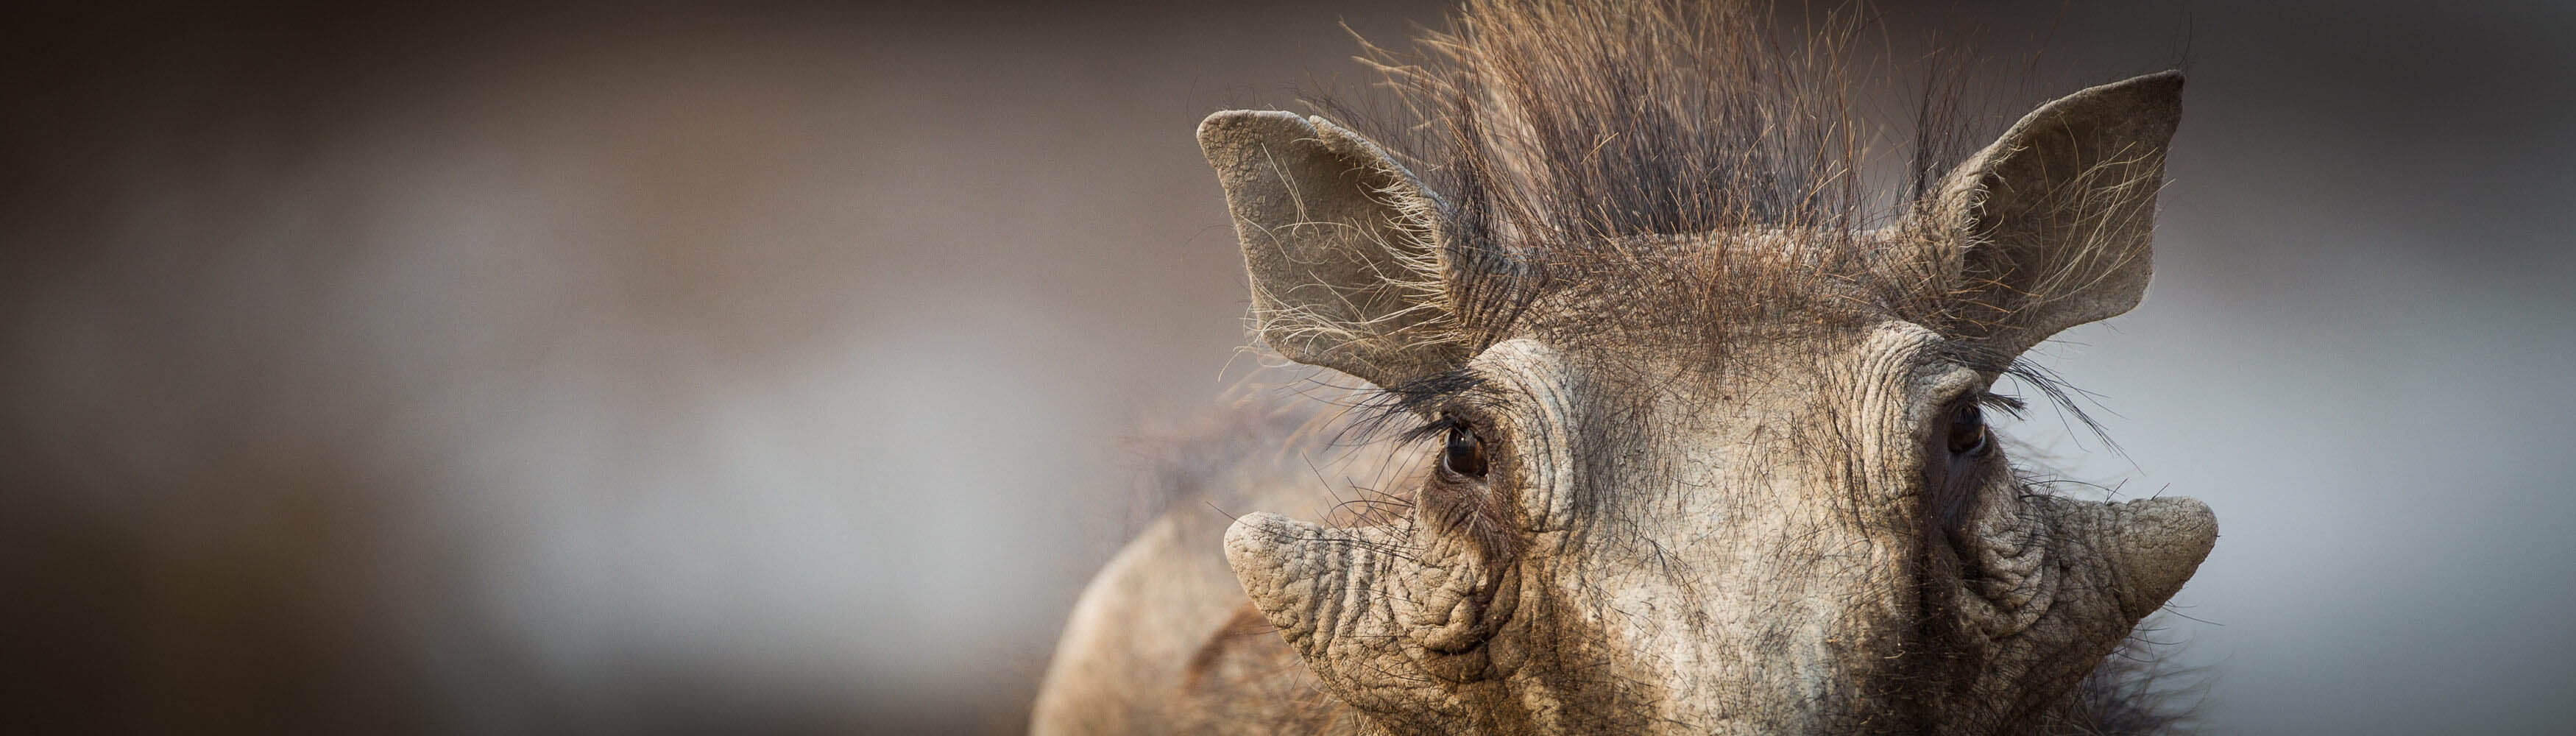 Warthog close up by Morgan Trimble